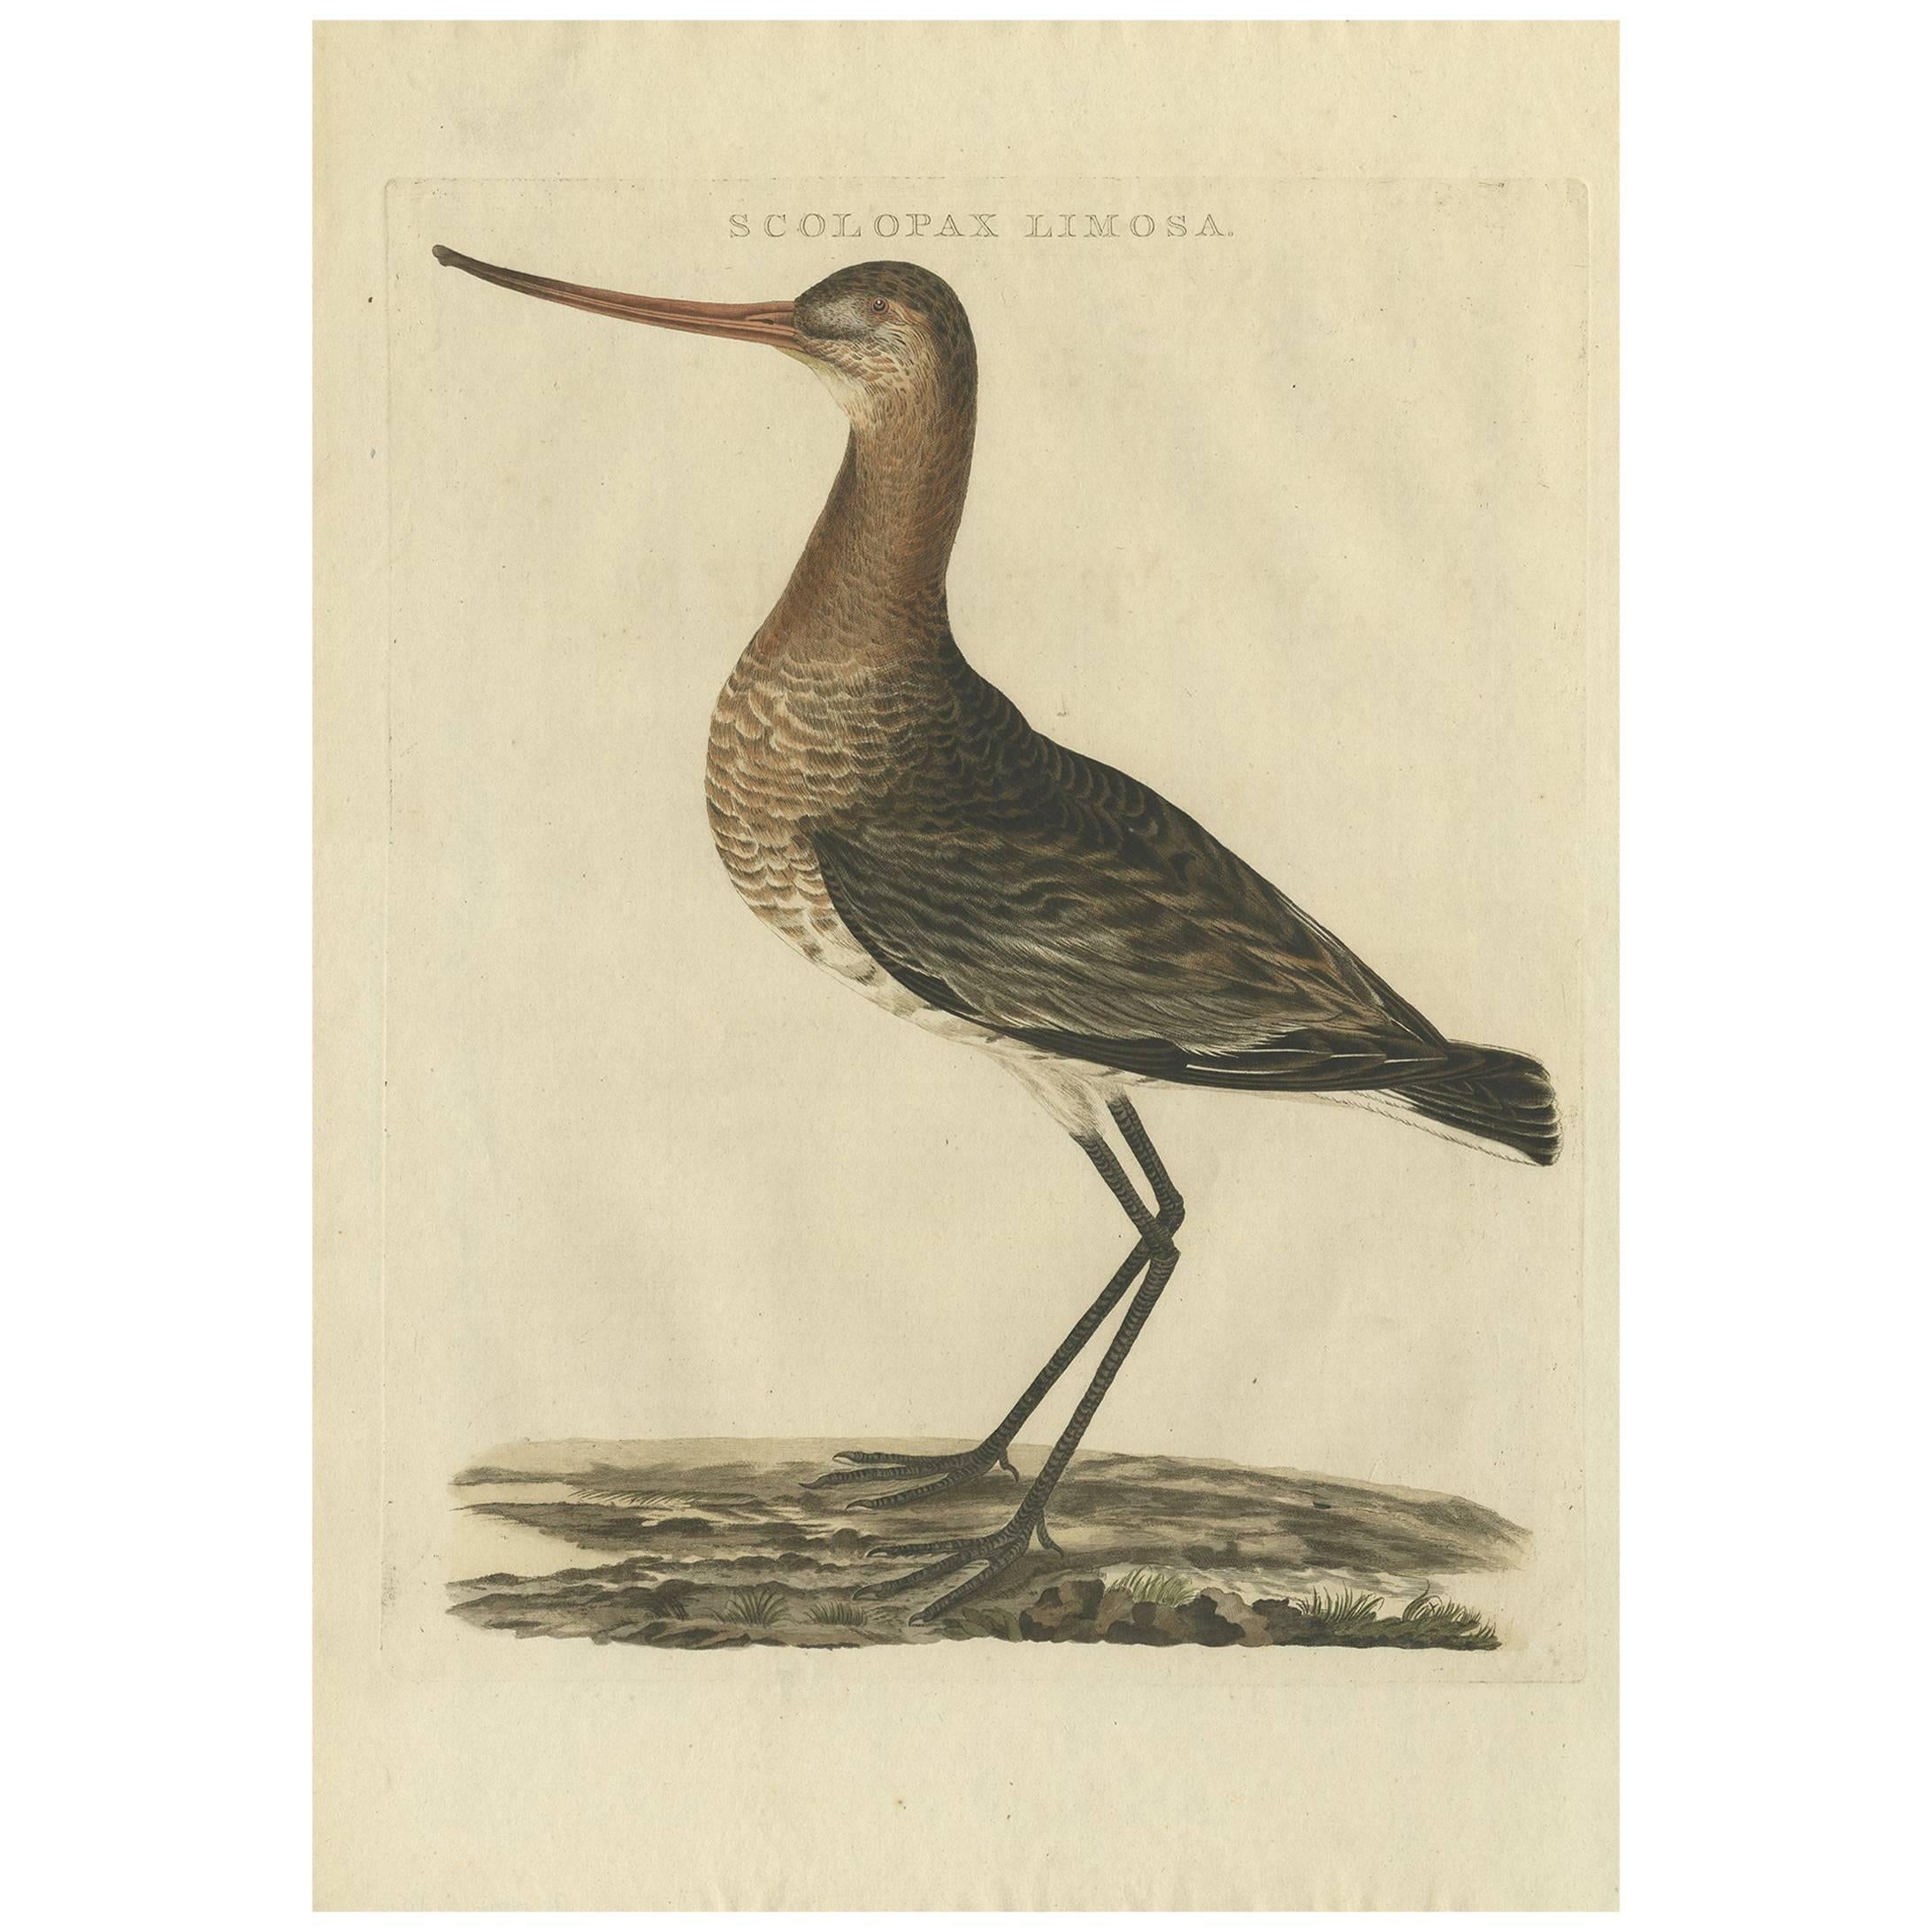 Antique Bird Print of the Black-Tailed Godwit by Sepp & Nozeman, 1809